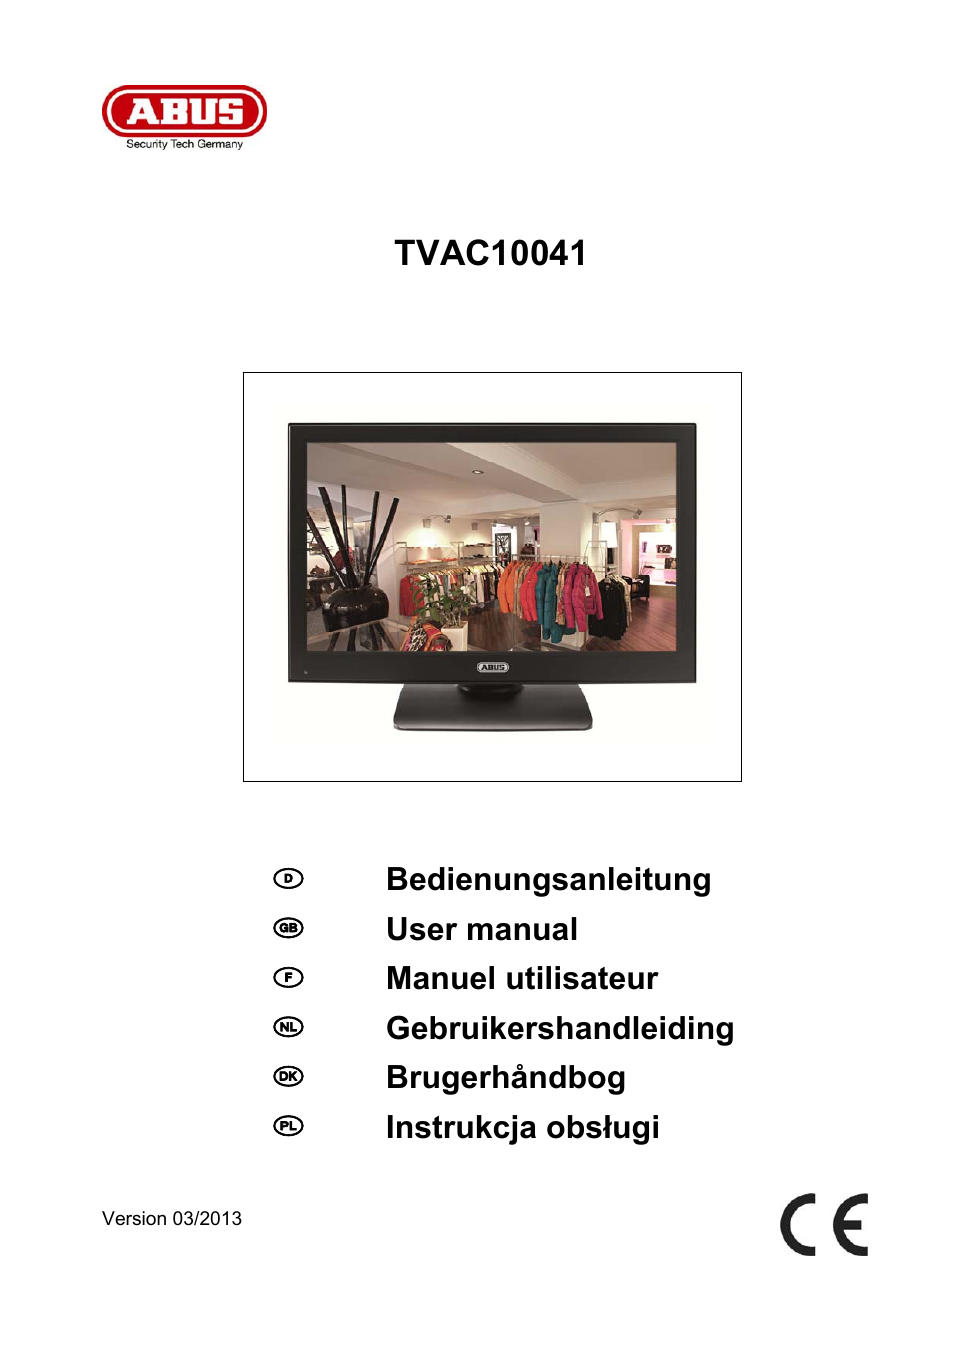 TVAC10041 Operating instructions